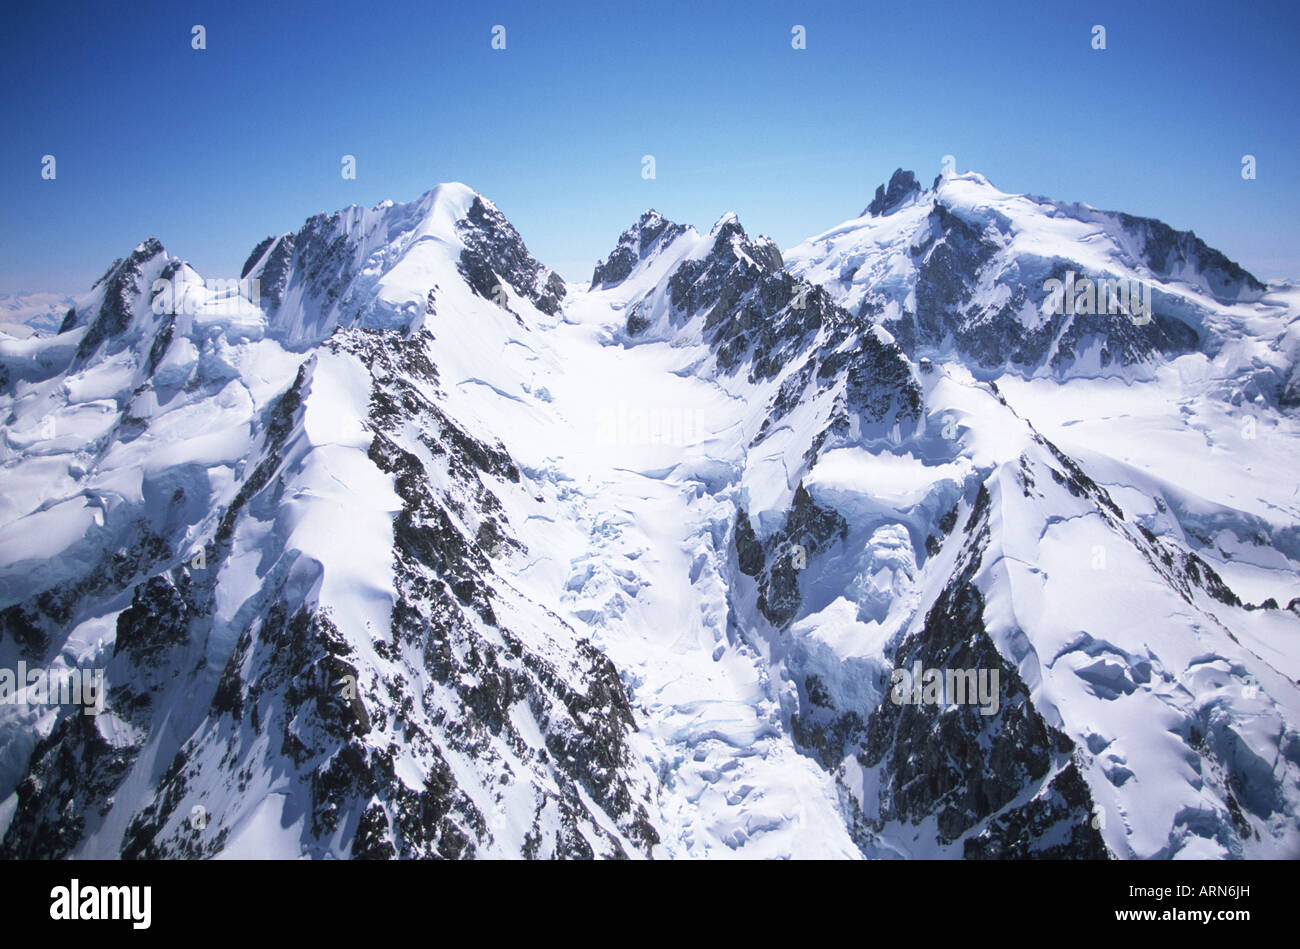 Coast Range, Mount Waddington, höchste Gipfel ganz in British Columbia, Kanada. Stockfoto